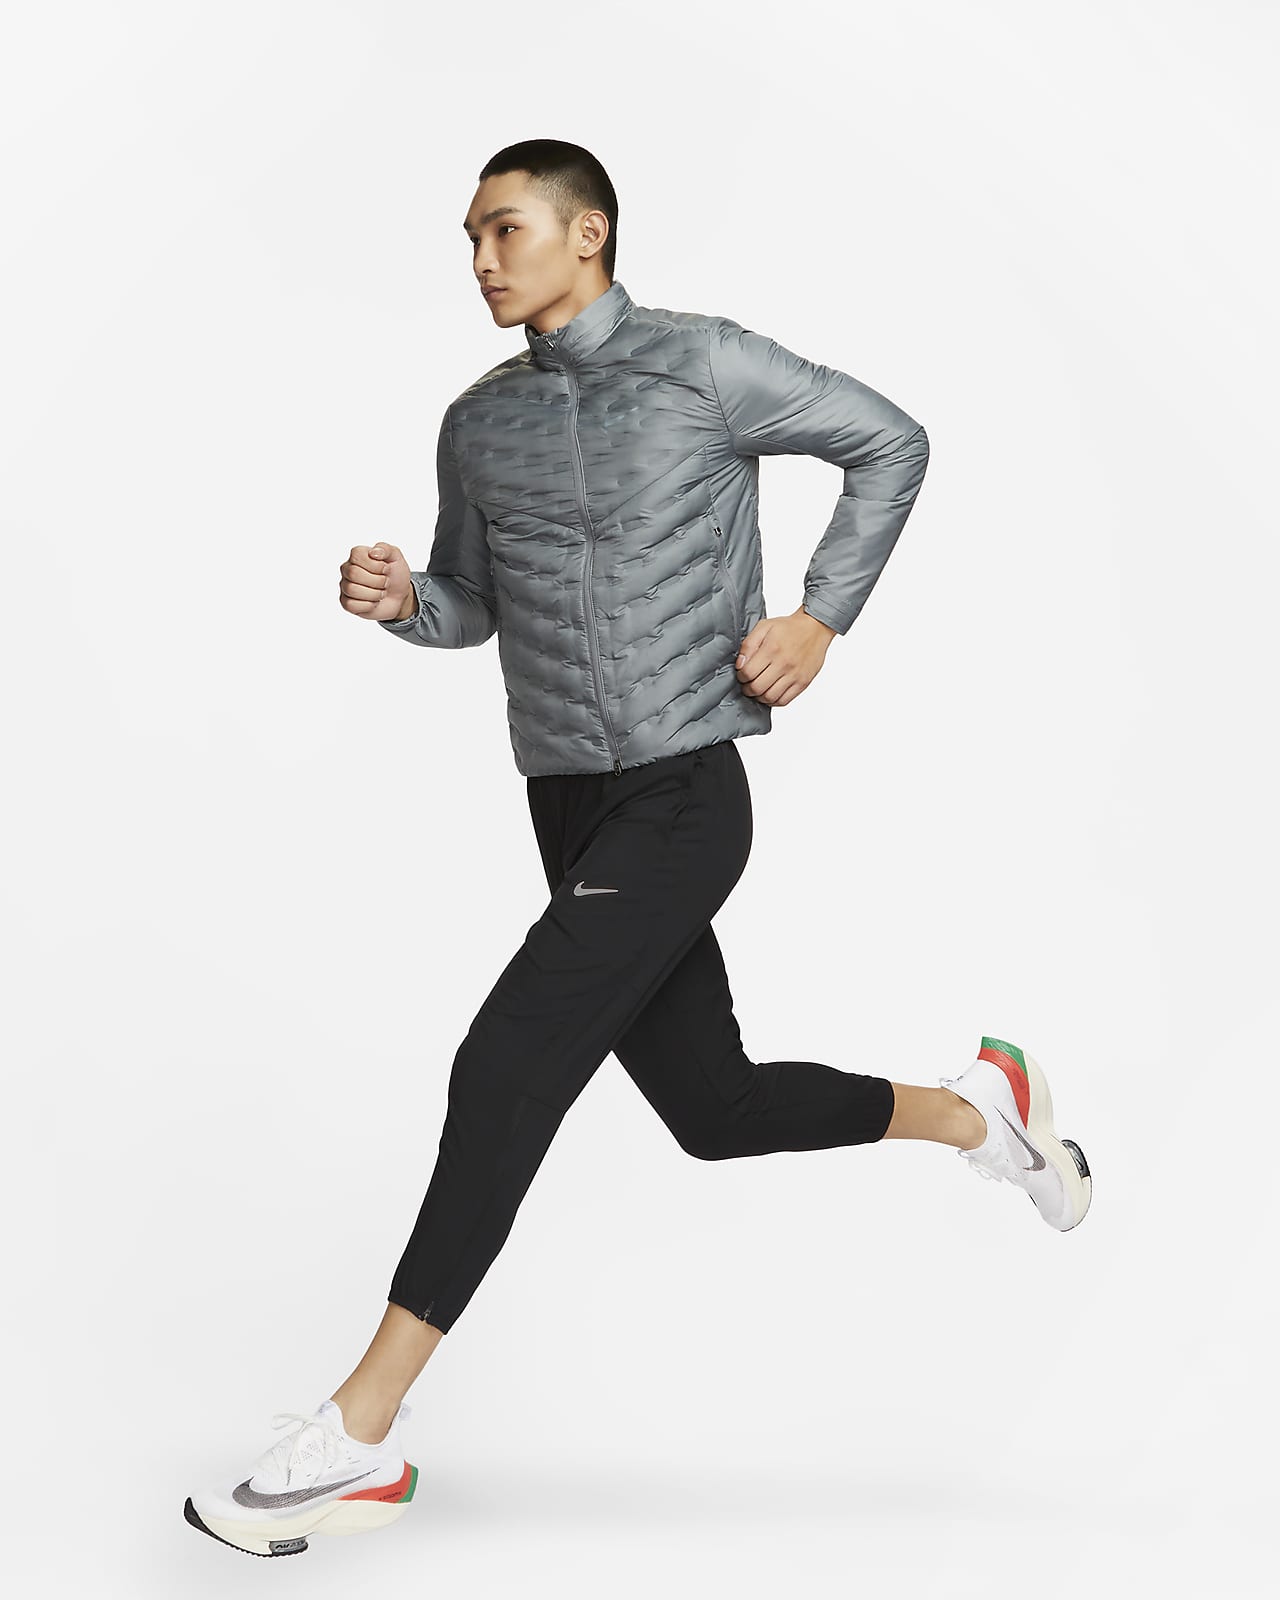 neu Nike Therma-FIT ADV Running Repel Men\'s Jacket. Down AeroLoft